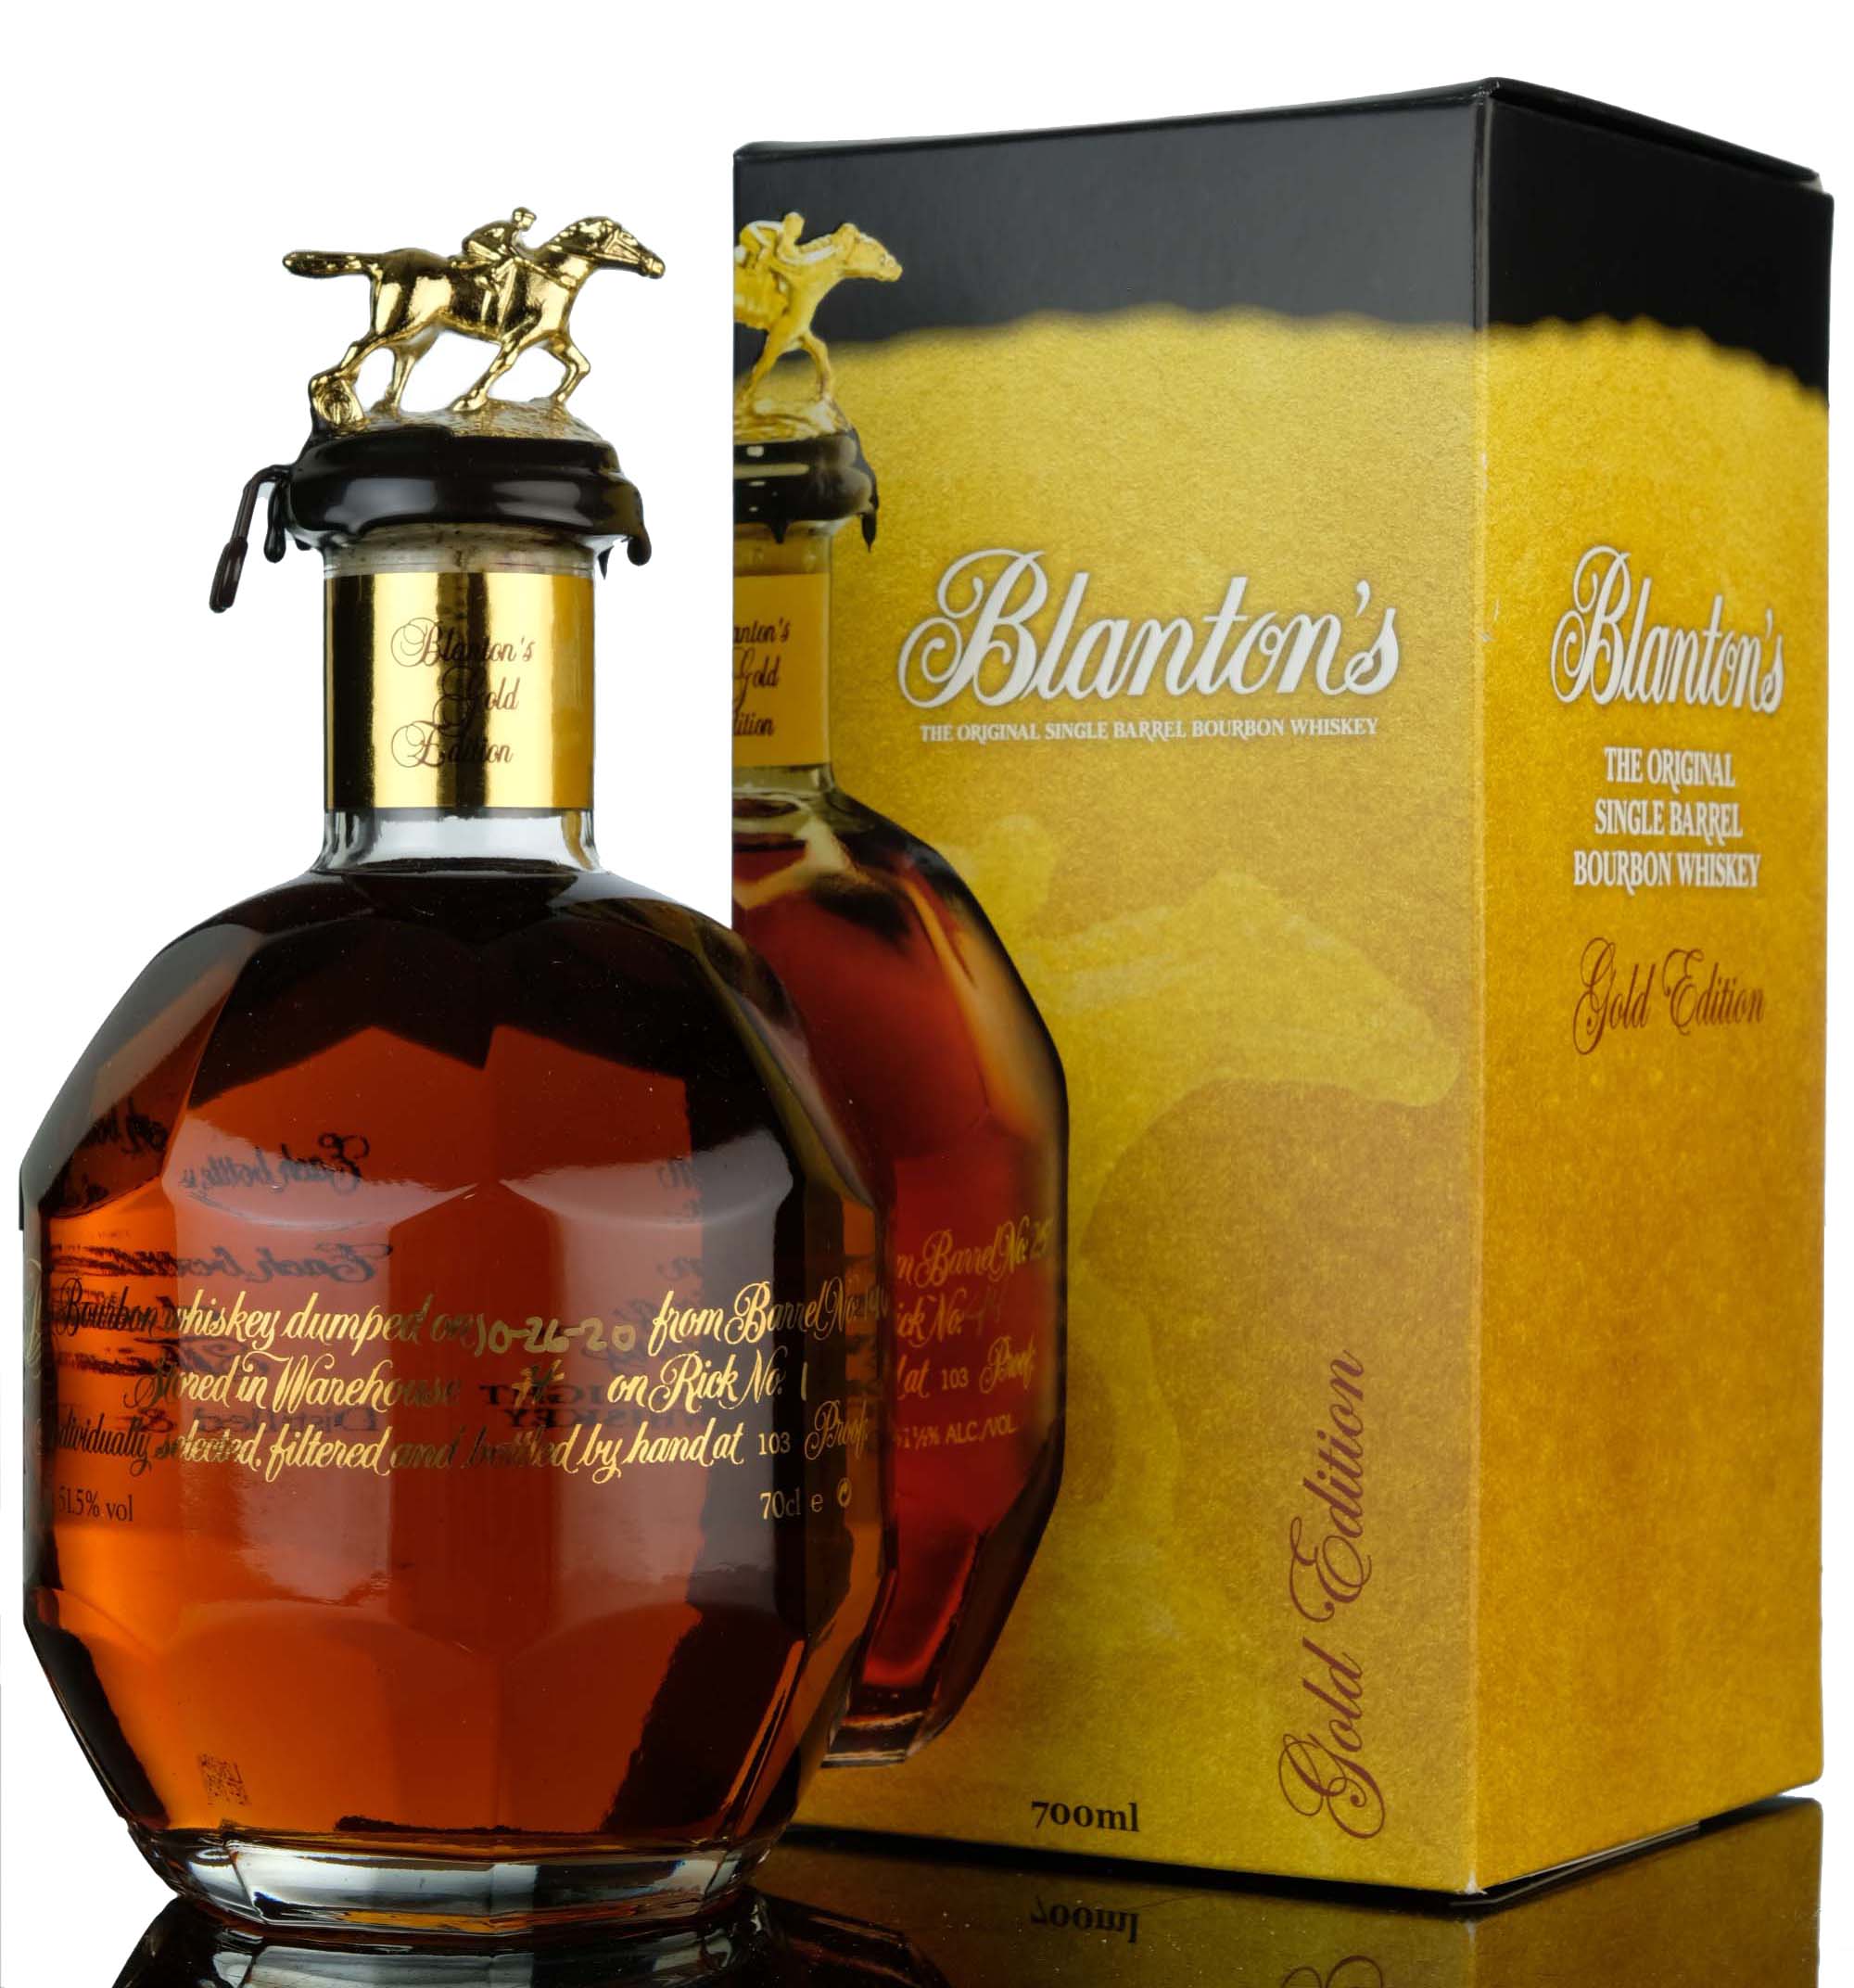 Blantons Gold Edition - Single Barrel 146 - 2020 Release